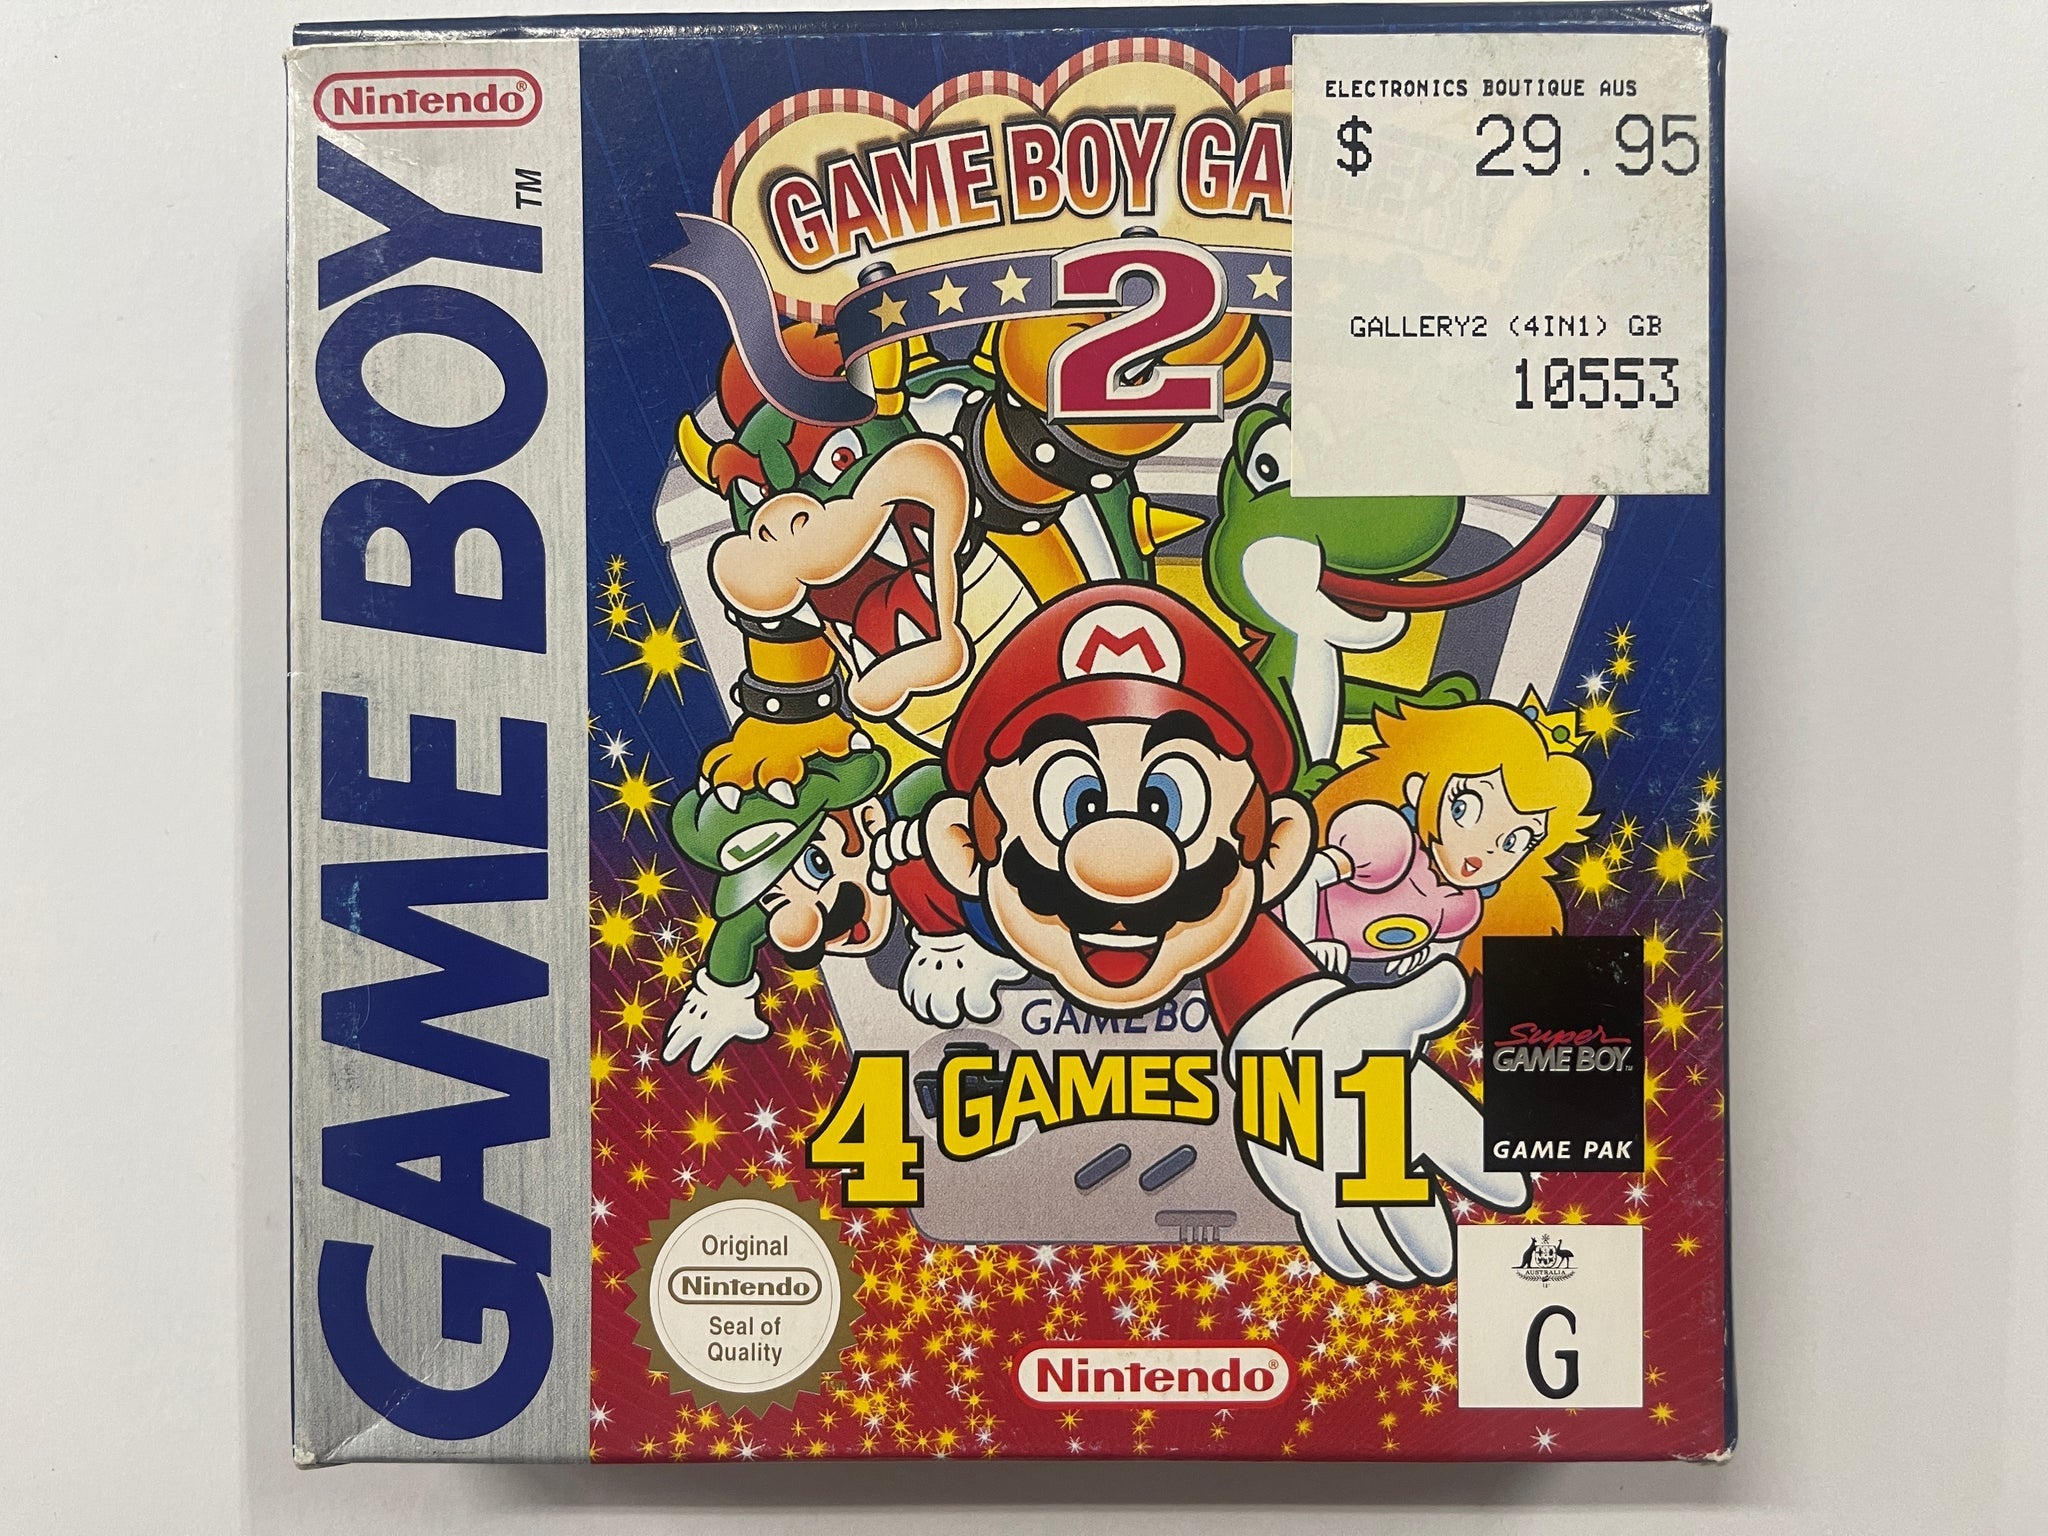 Game | Nintendo Gameboy GB | Game Boy Gallery 2: 4 Games In 1